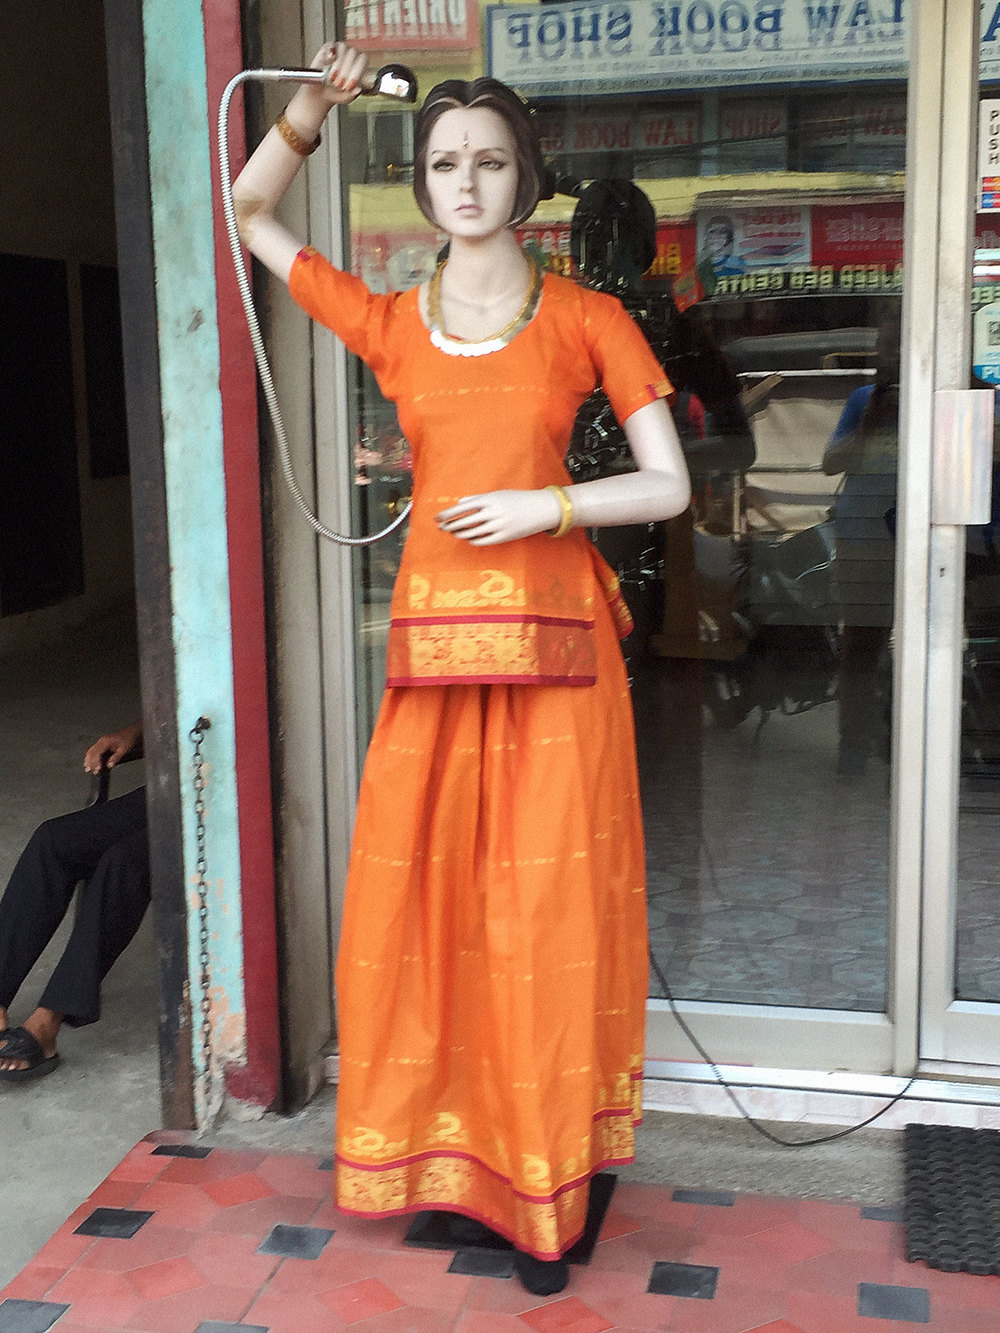 Creepy manikin on the streets of Kochi.